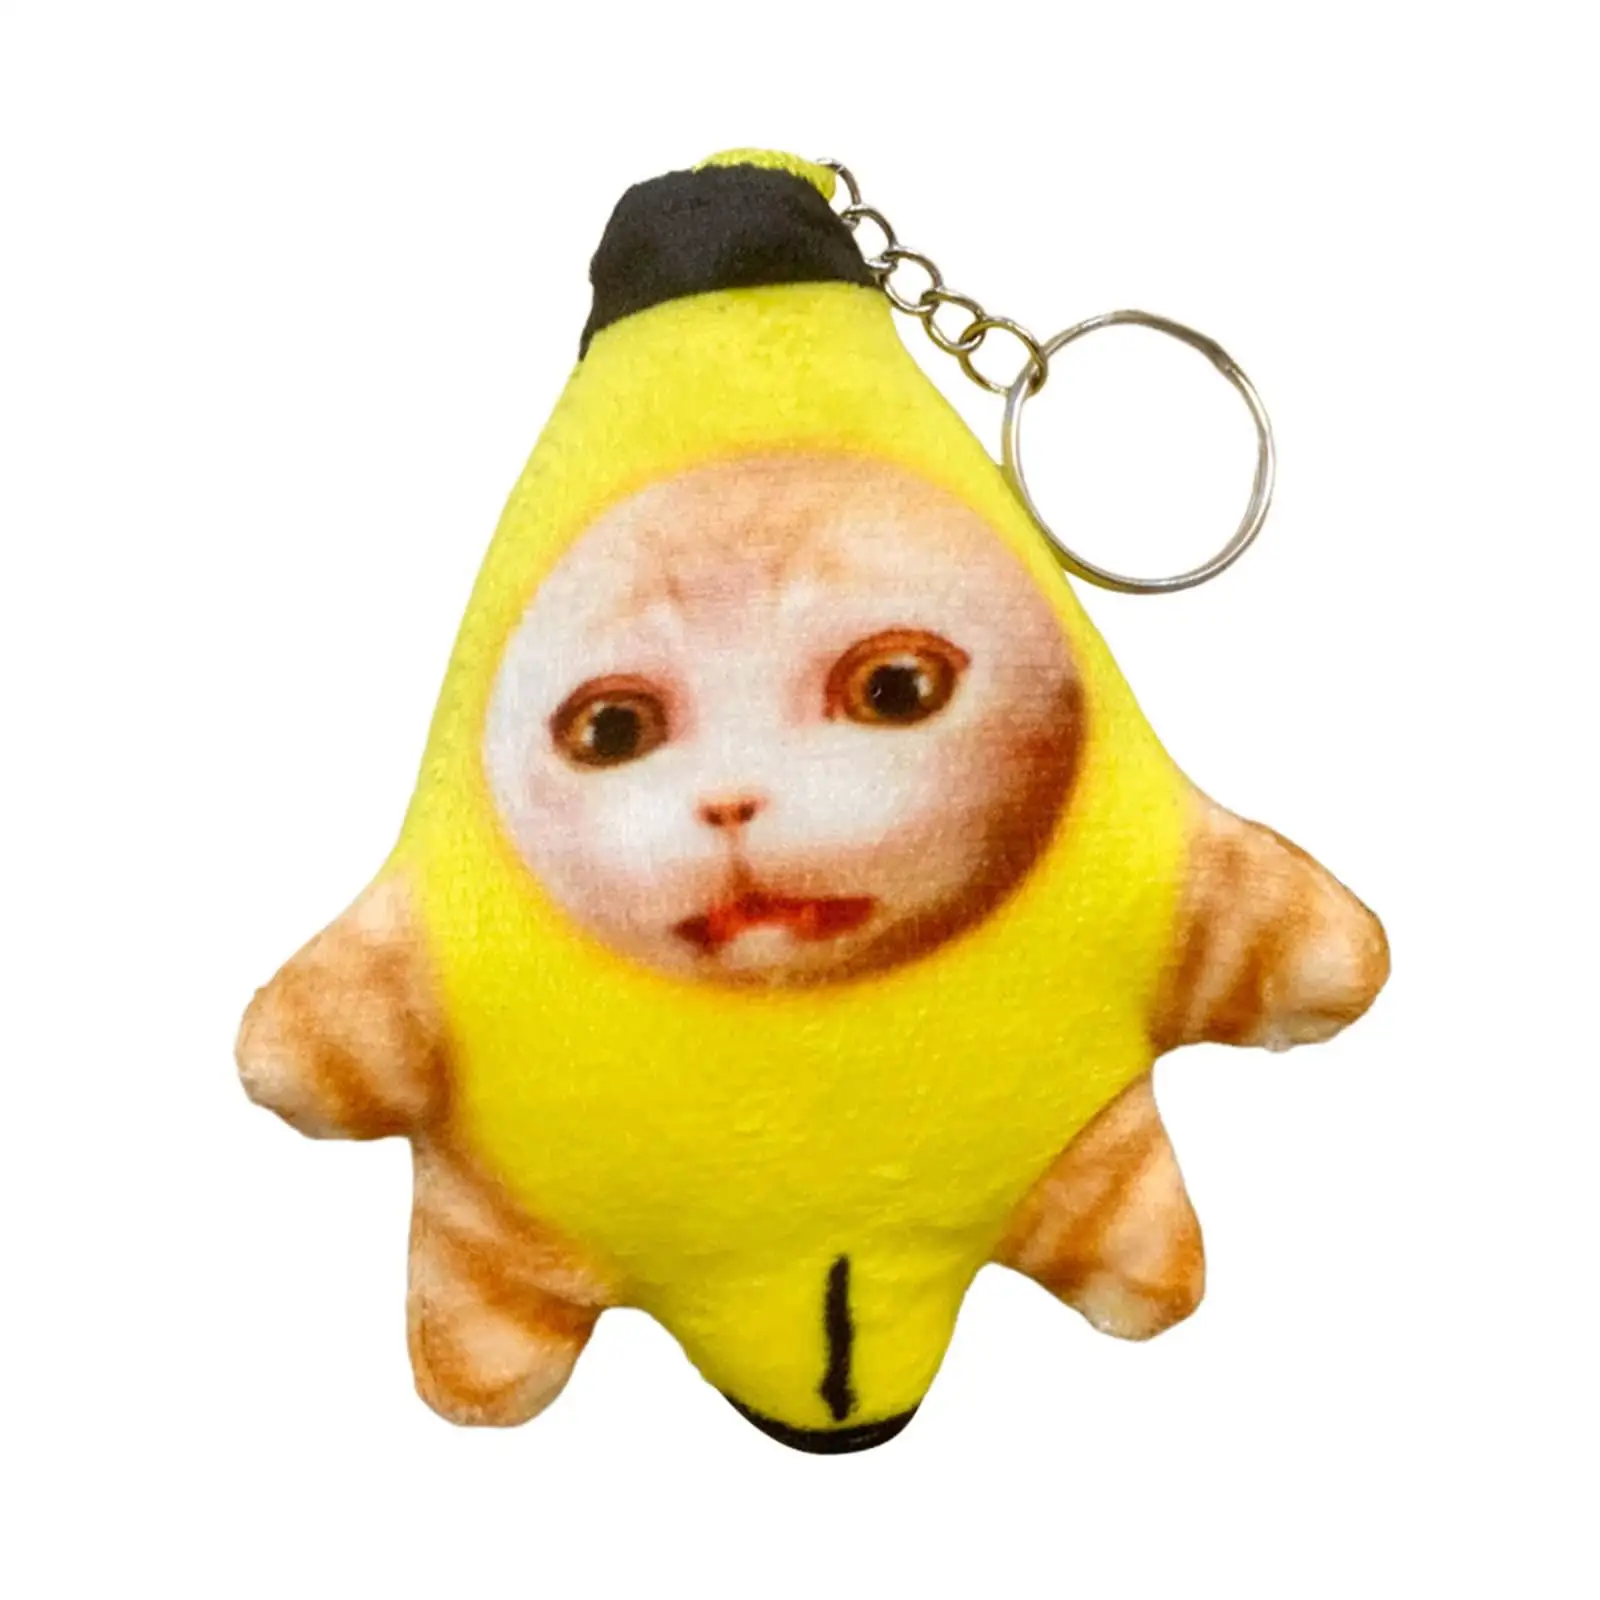 Banana Plush Novelty Hanging Adorable Banana Plush Doll Keychain with Sound for Party Favor Purse Handbag Backpack Adults